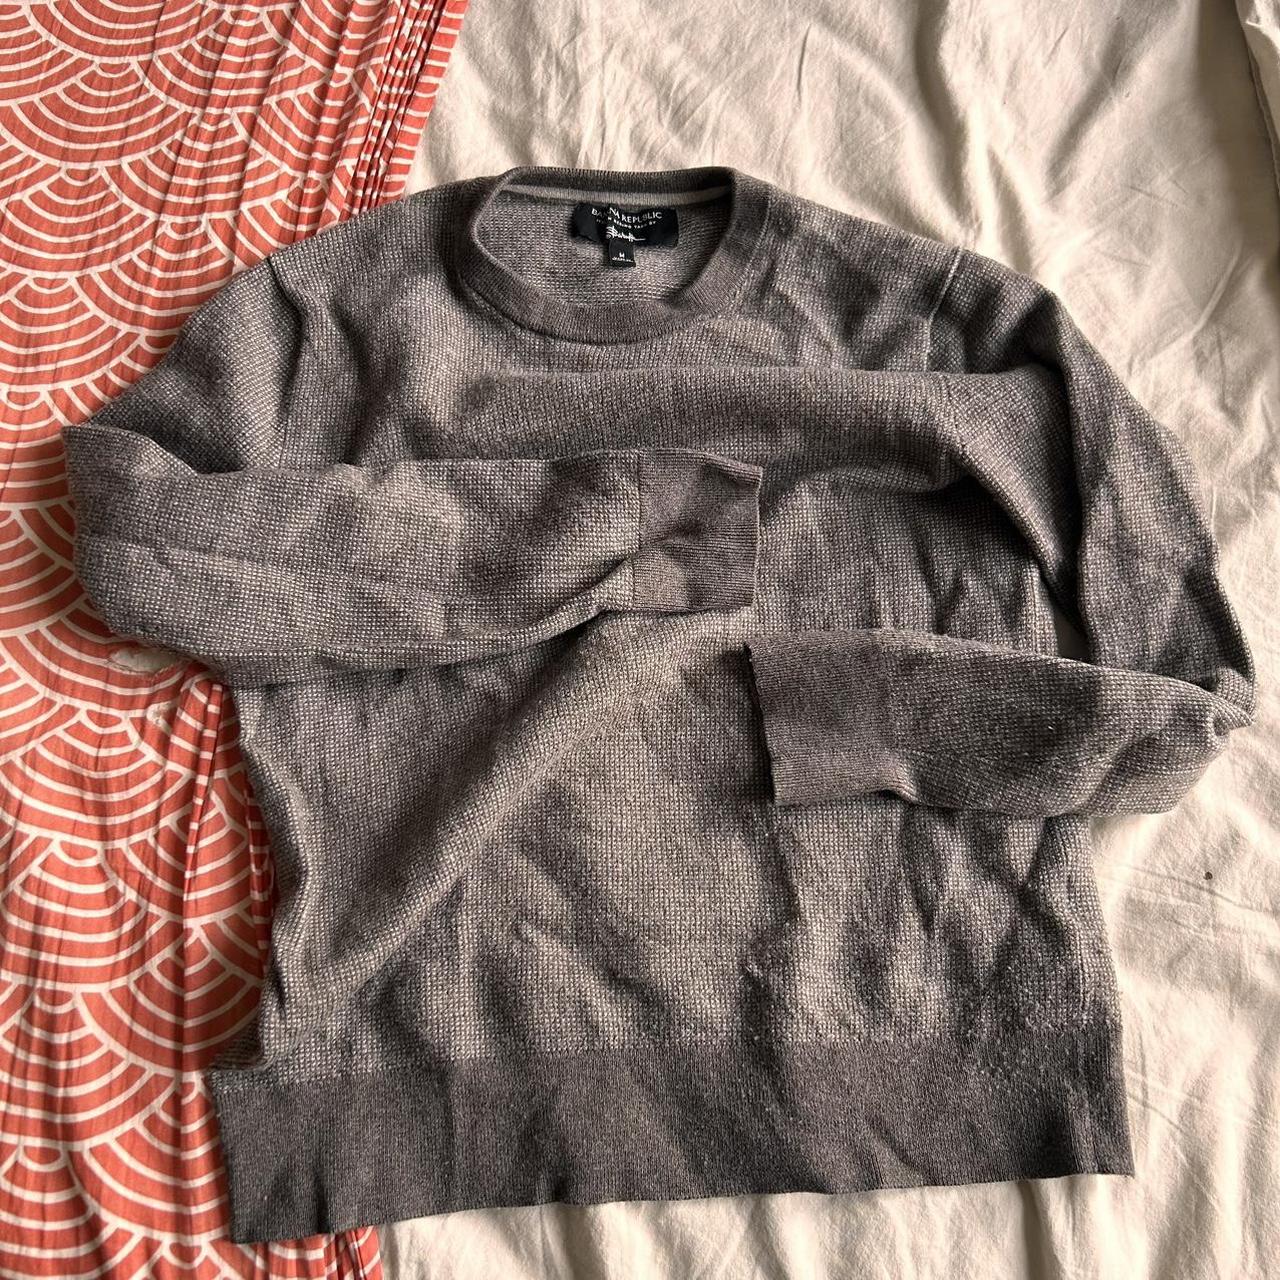 Taupe Italian merino wool sweater. Very comfy and... - Depop